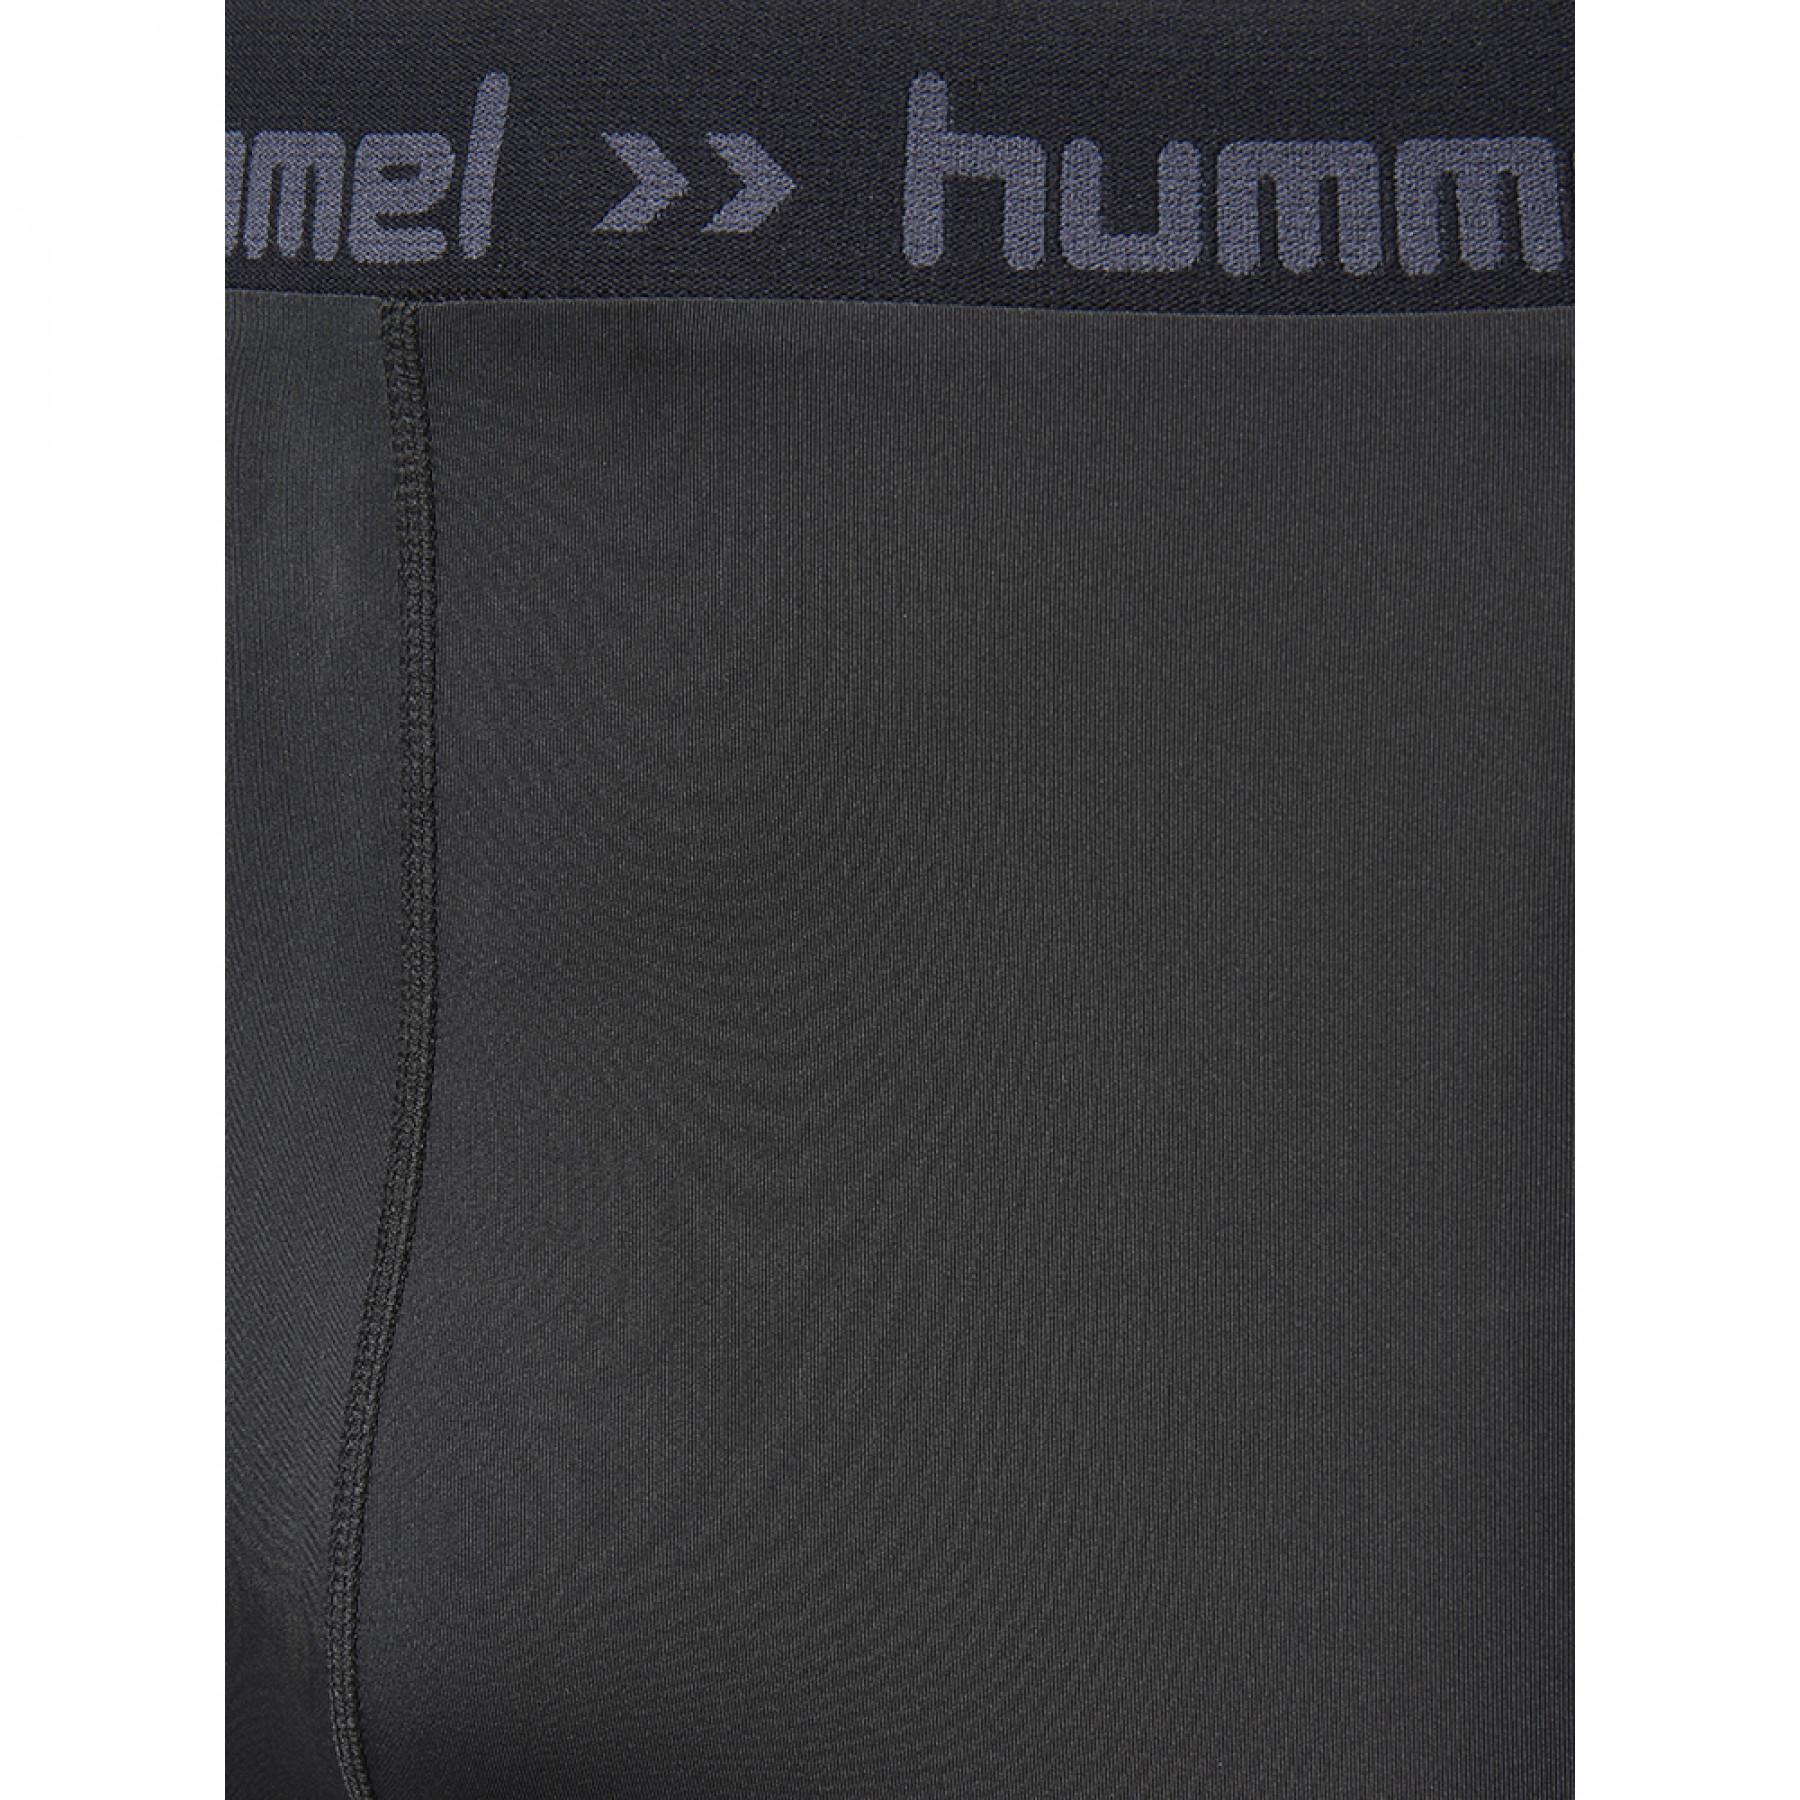 Meias-calças Hummel first perf